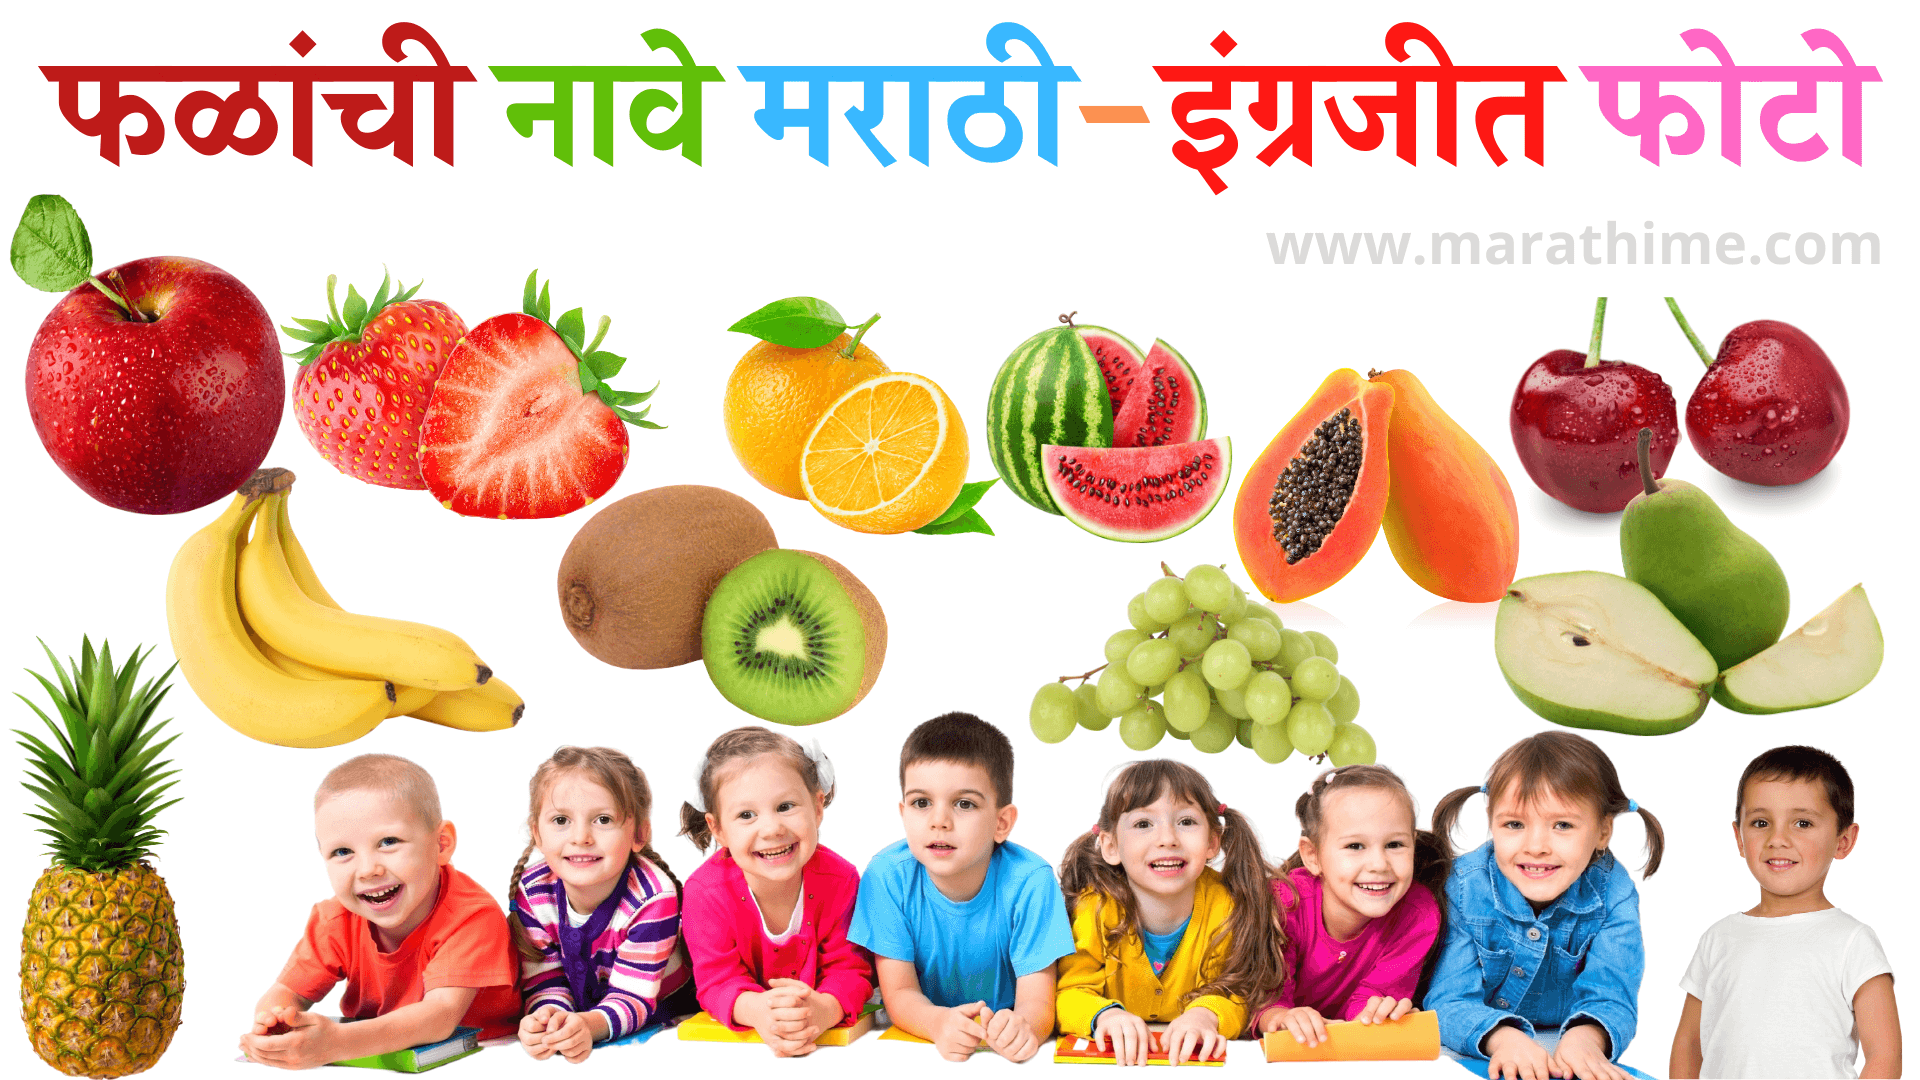 You are currently viewing फळांची नावे मराठी-इंग्रजीत फोटो | Fruits Name in Marathi